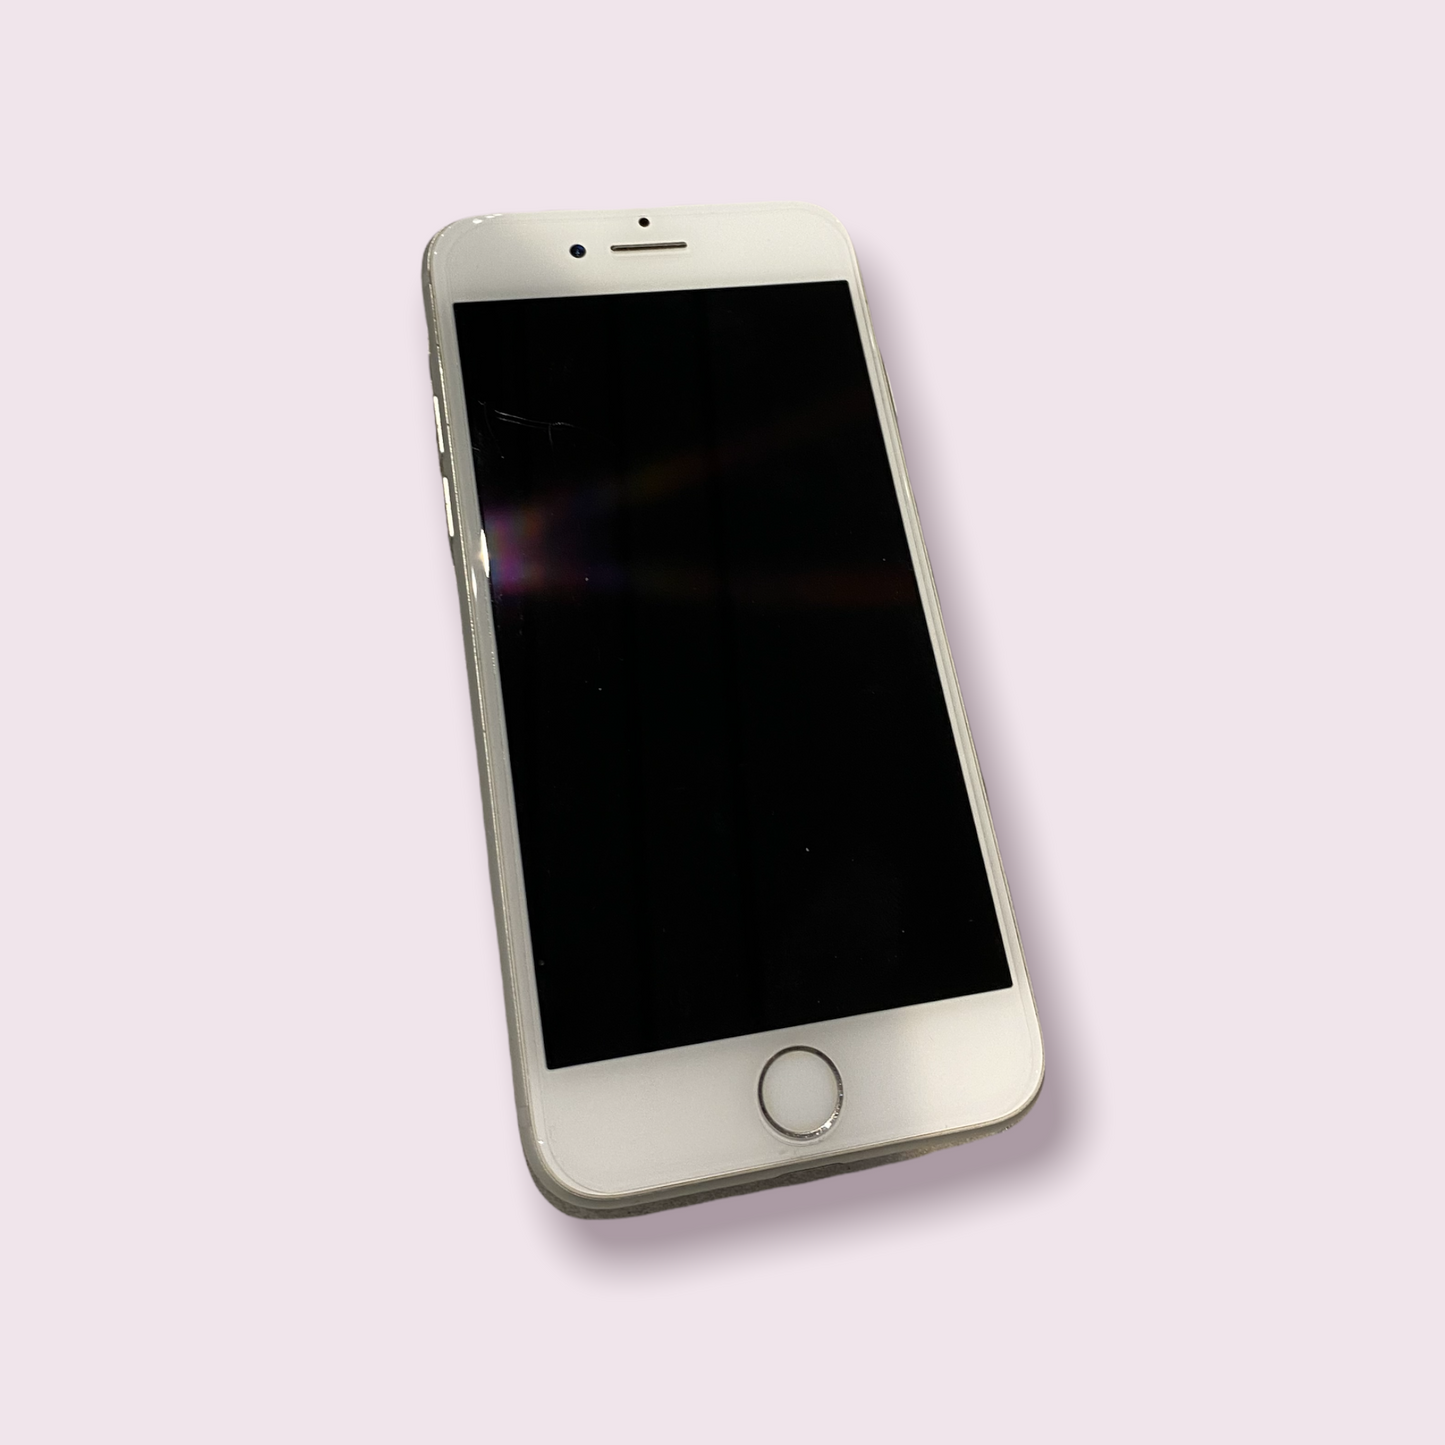 Apple iPhone 7 32GB Silver - Unlocked - Grade B